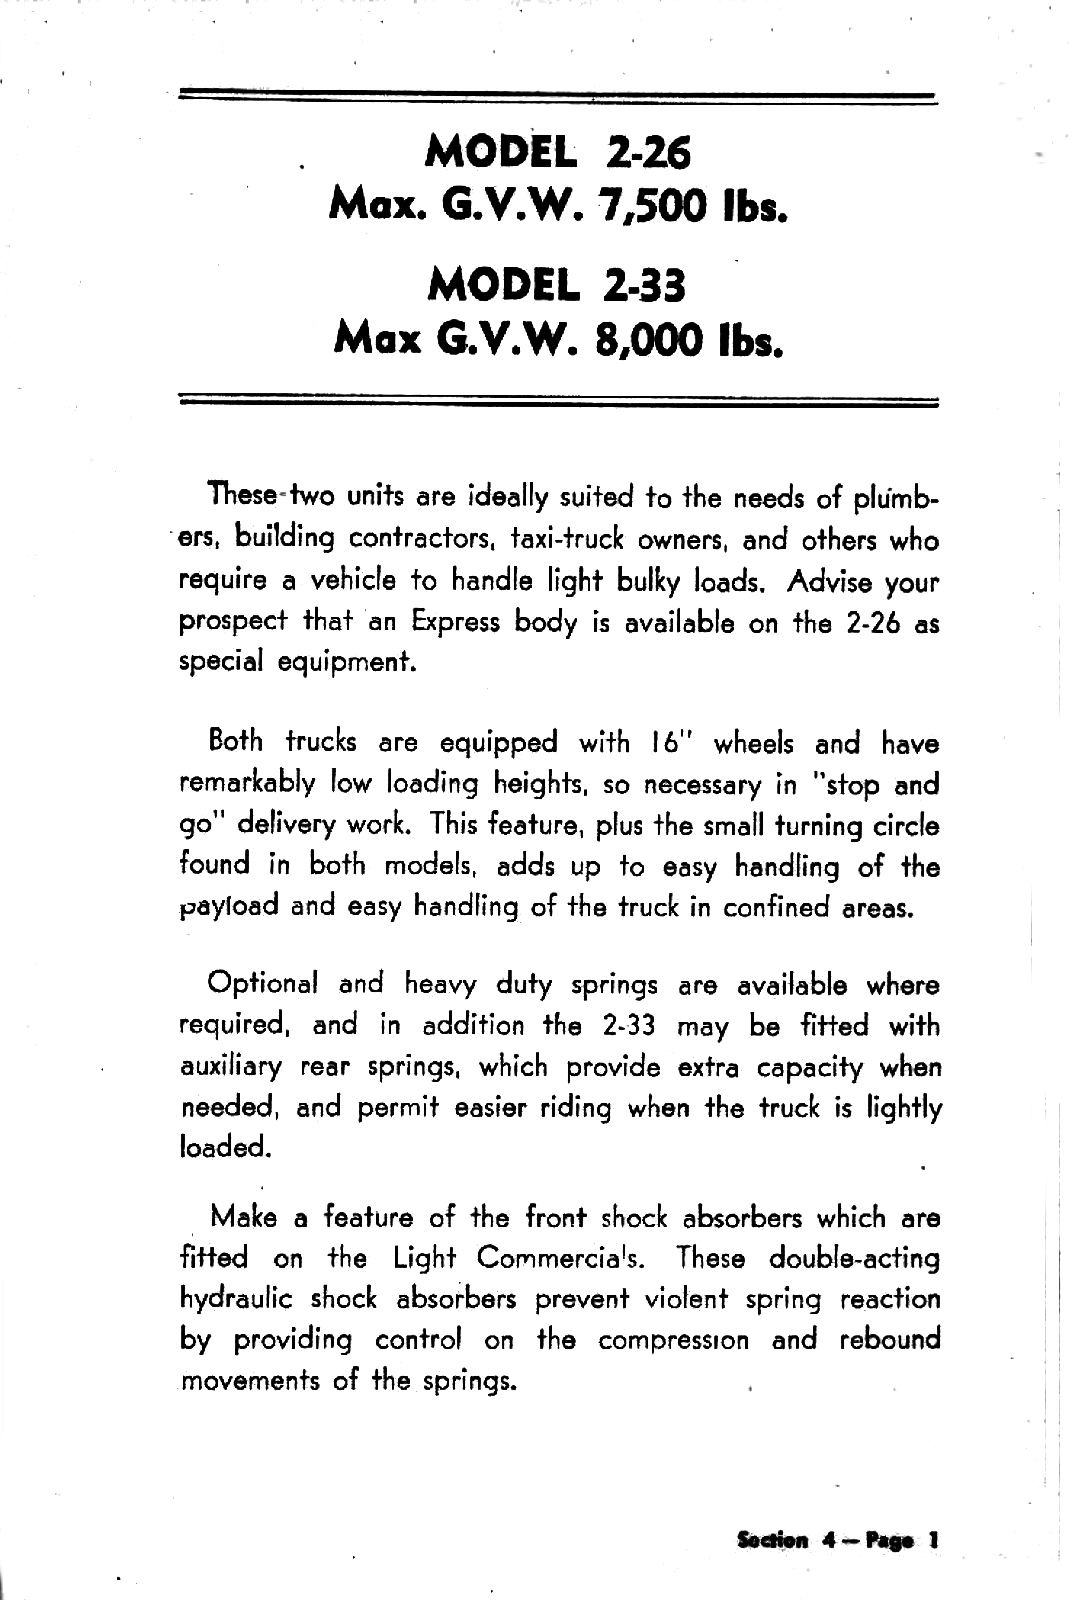 1953 Chrysler Truck Sales Manual (Aus)-04-01